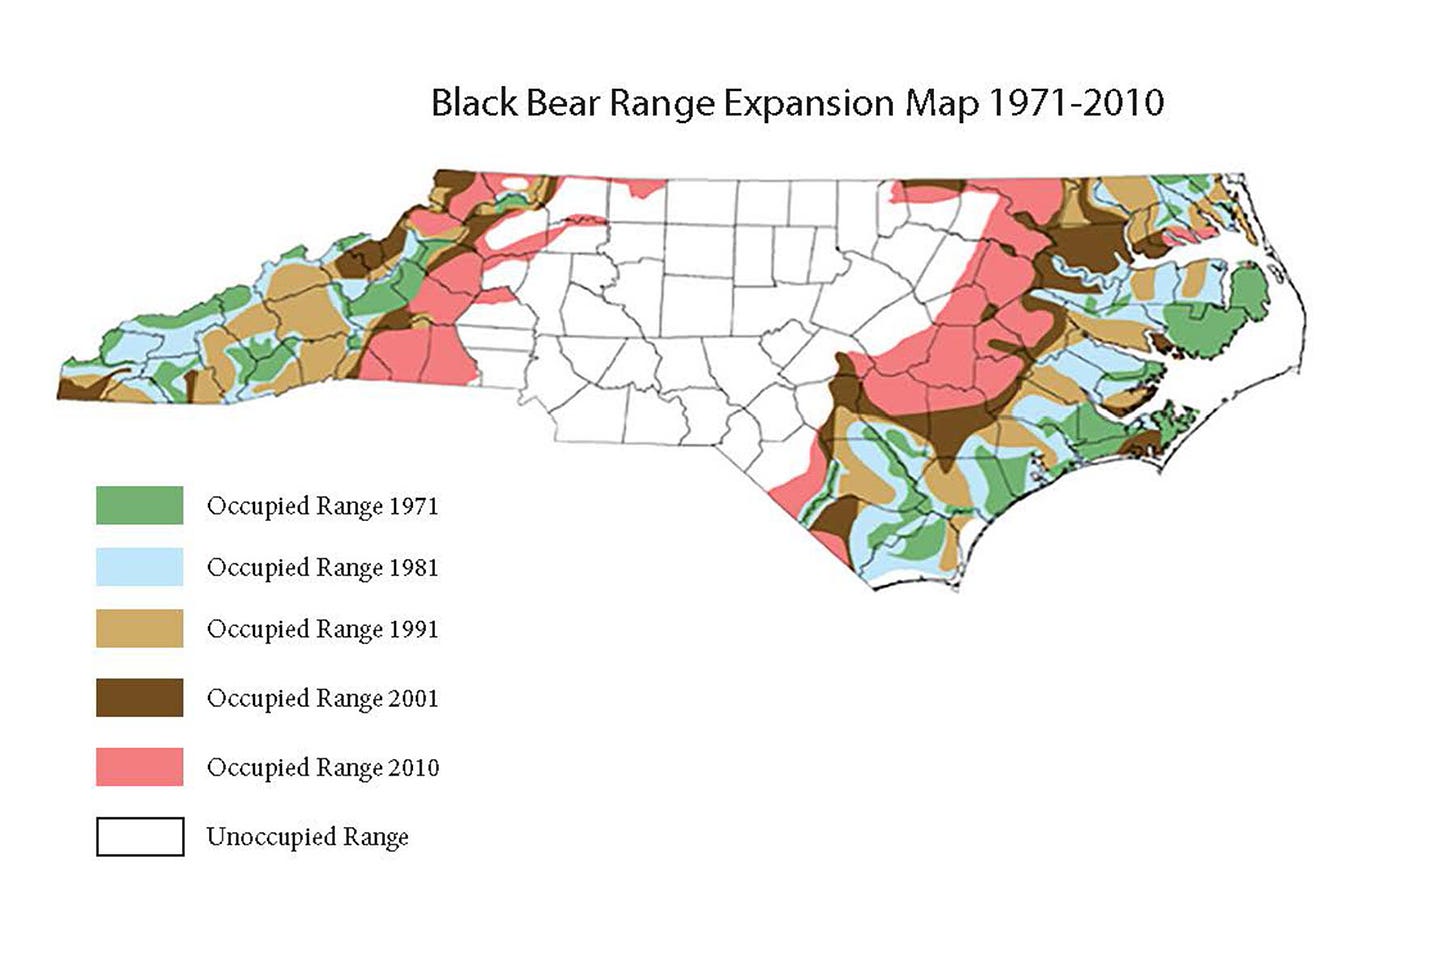 https://www.ncwildlife.org/Portals/0/Learning/images/Species/Mammals/Black-Bear-Range-Expansion-Map-through2010.jpg